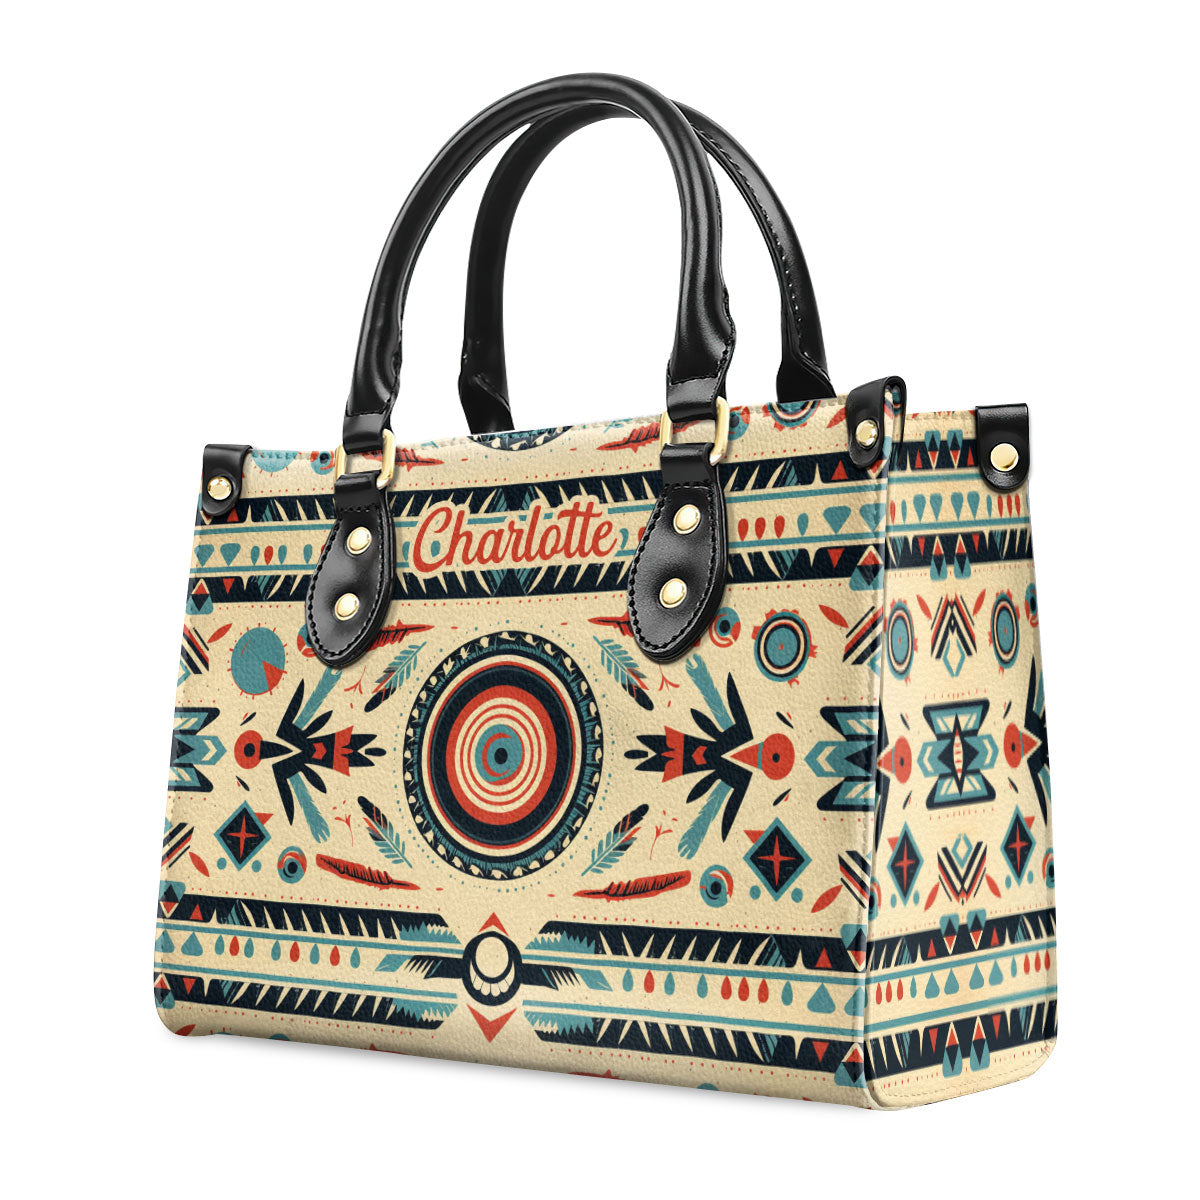 Native American Art - Personalized Leather Handbag MS127